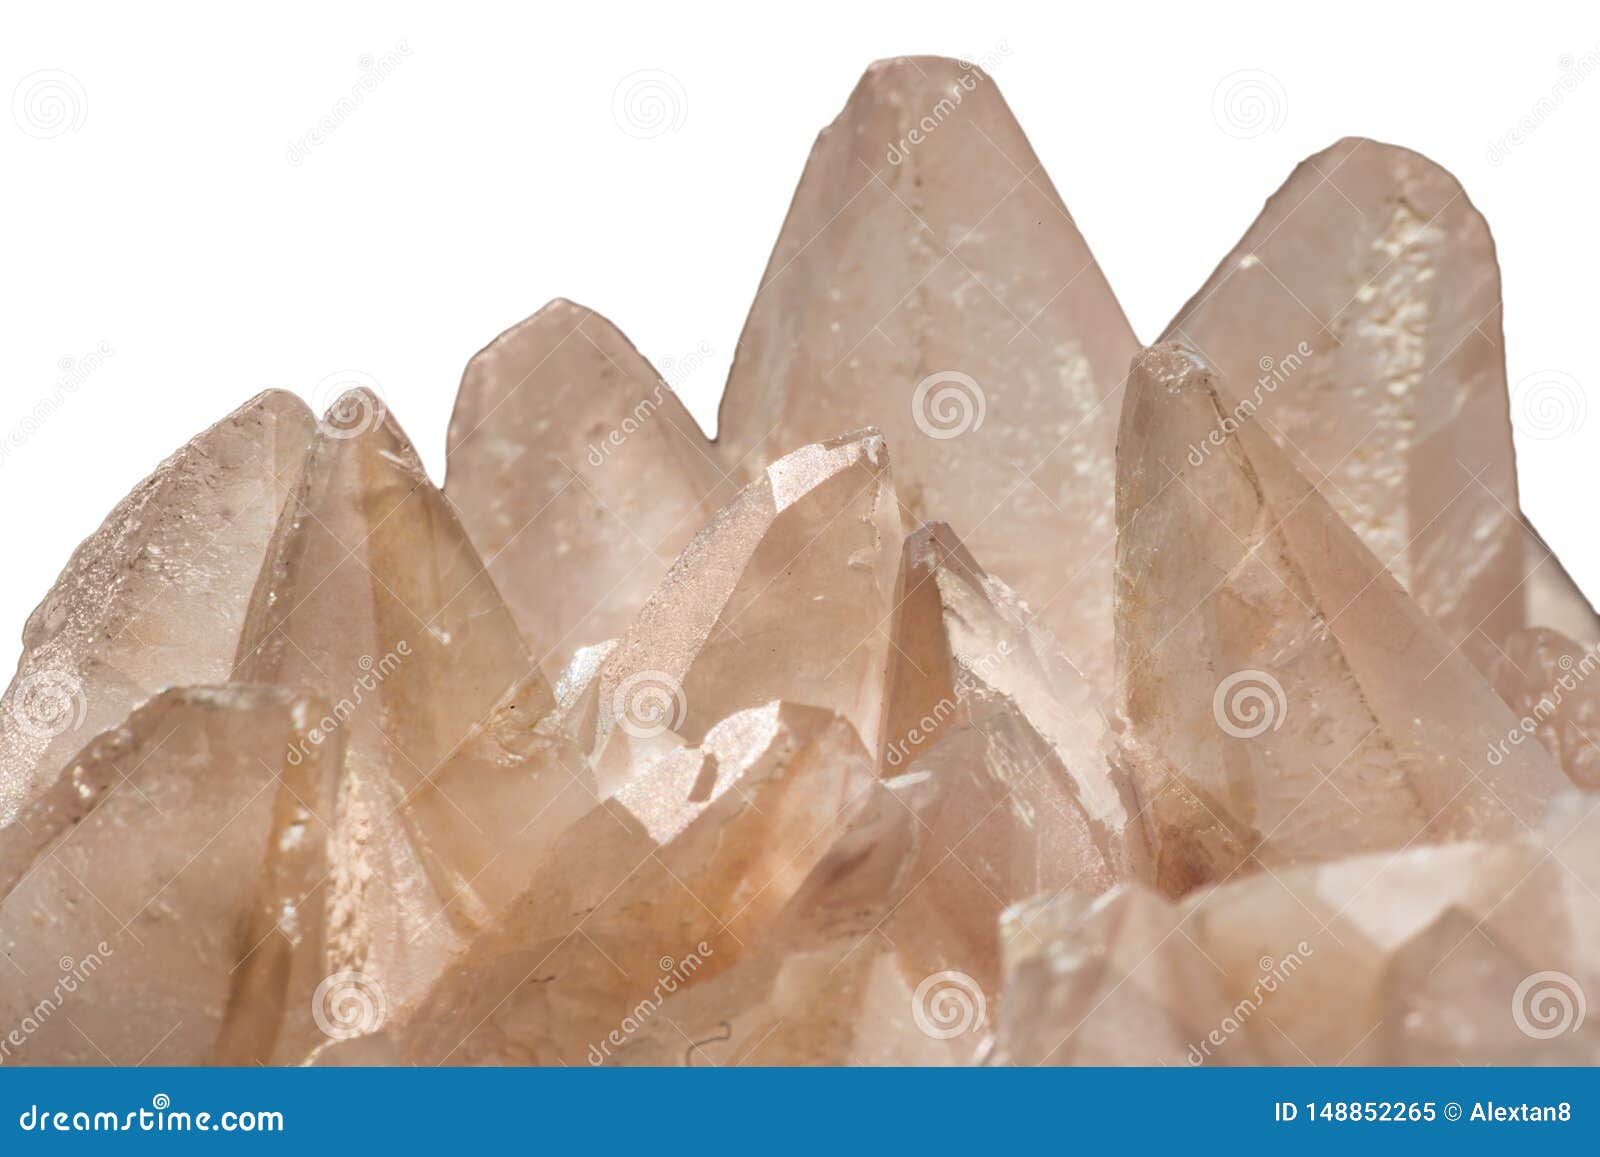 crystal rose quartz semiprecious macro raw stone